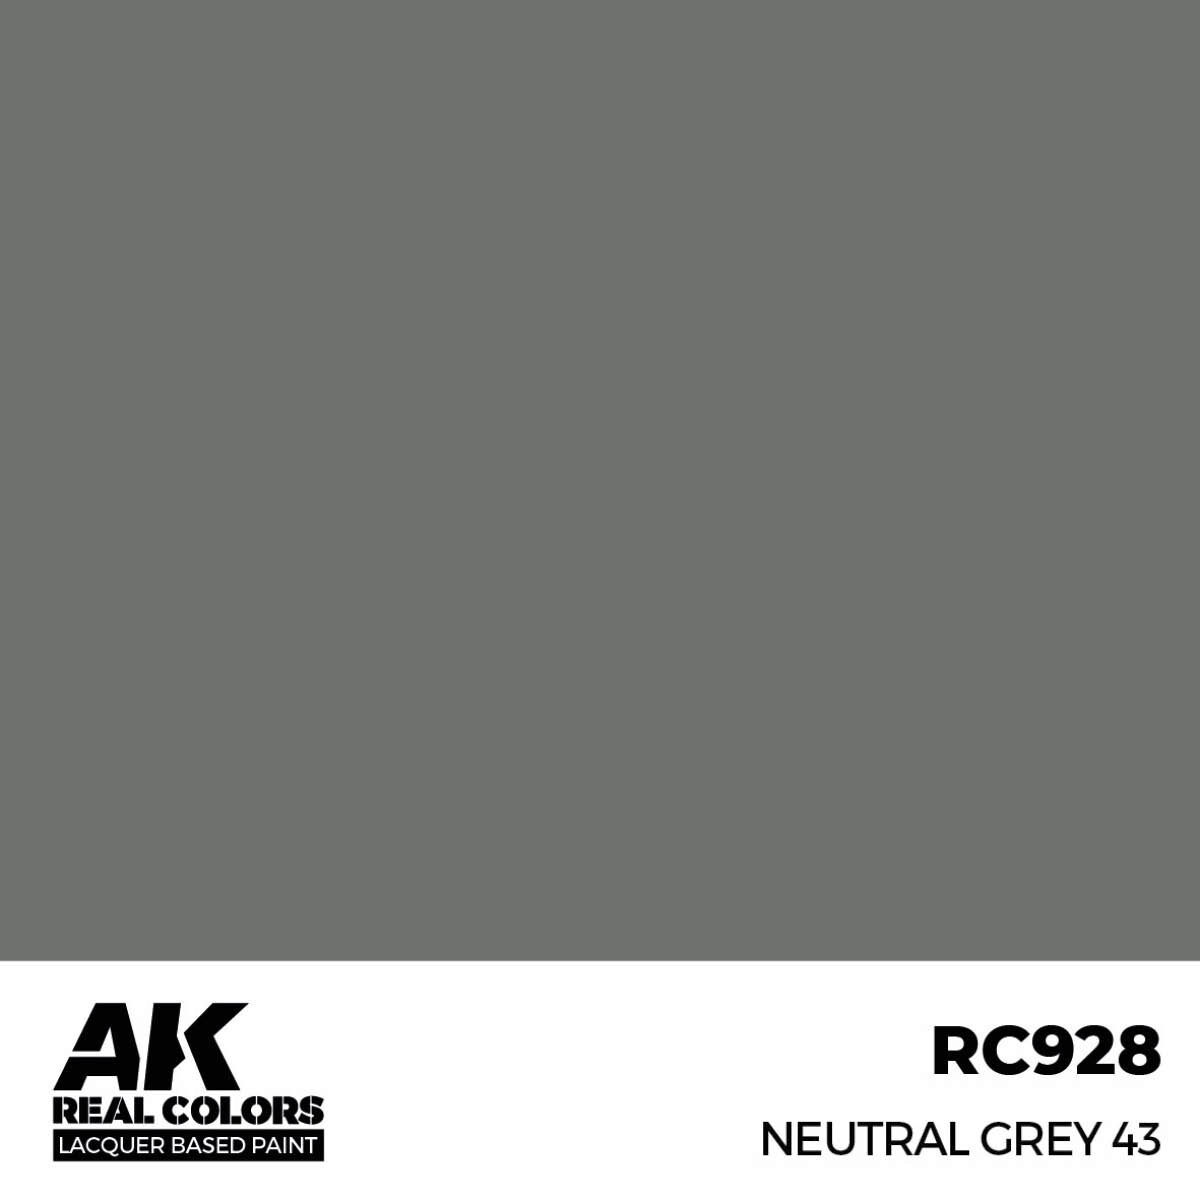 AK RC928 Real Colors Neutral Grey 43 17 ml.